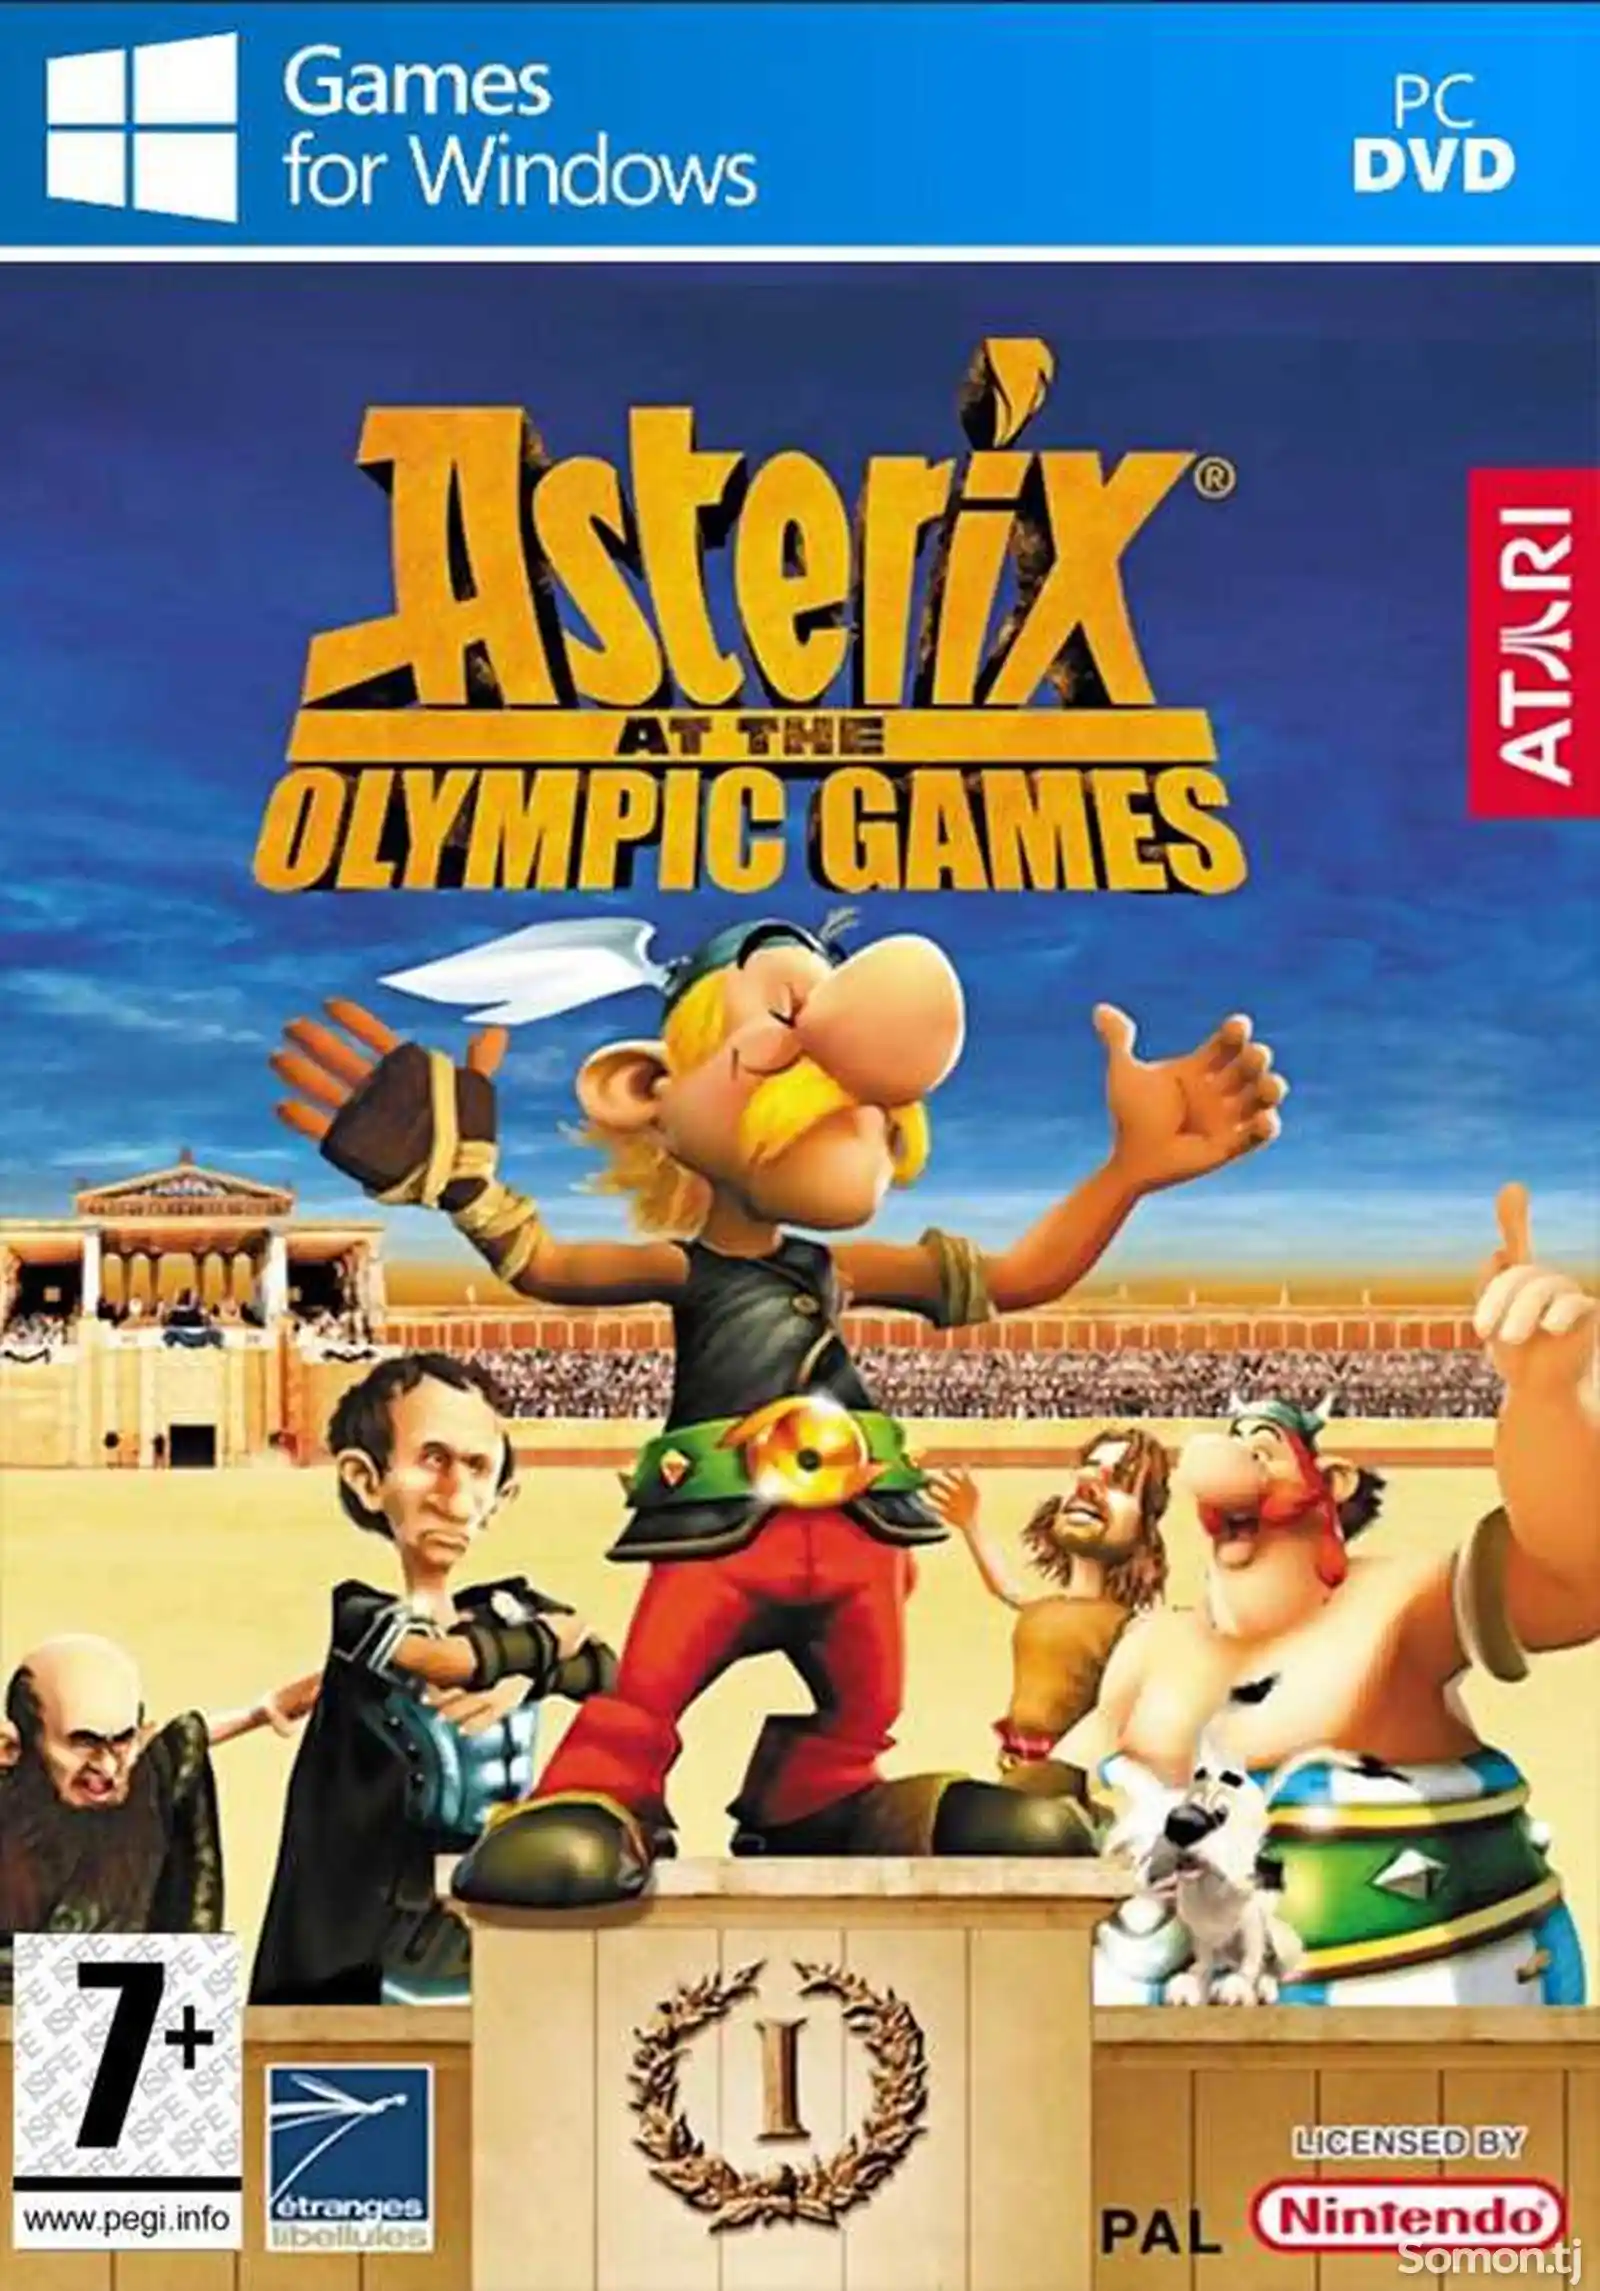 Игра Asterix at the olympic games для компьютера-пк-pc-1